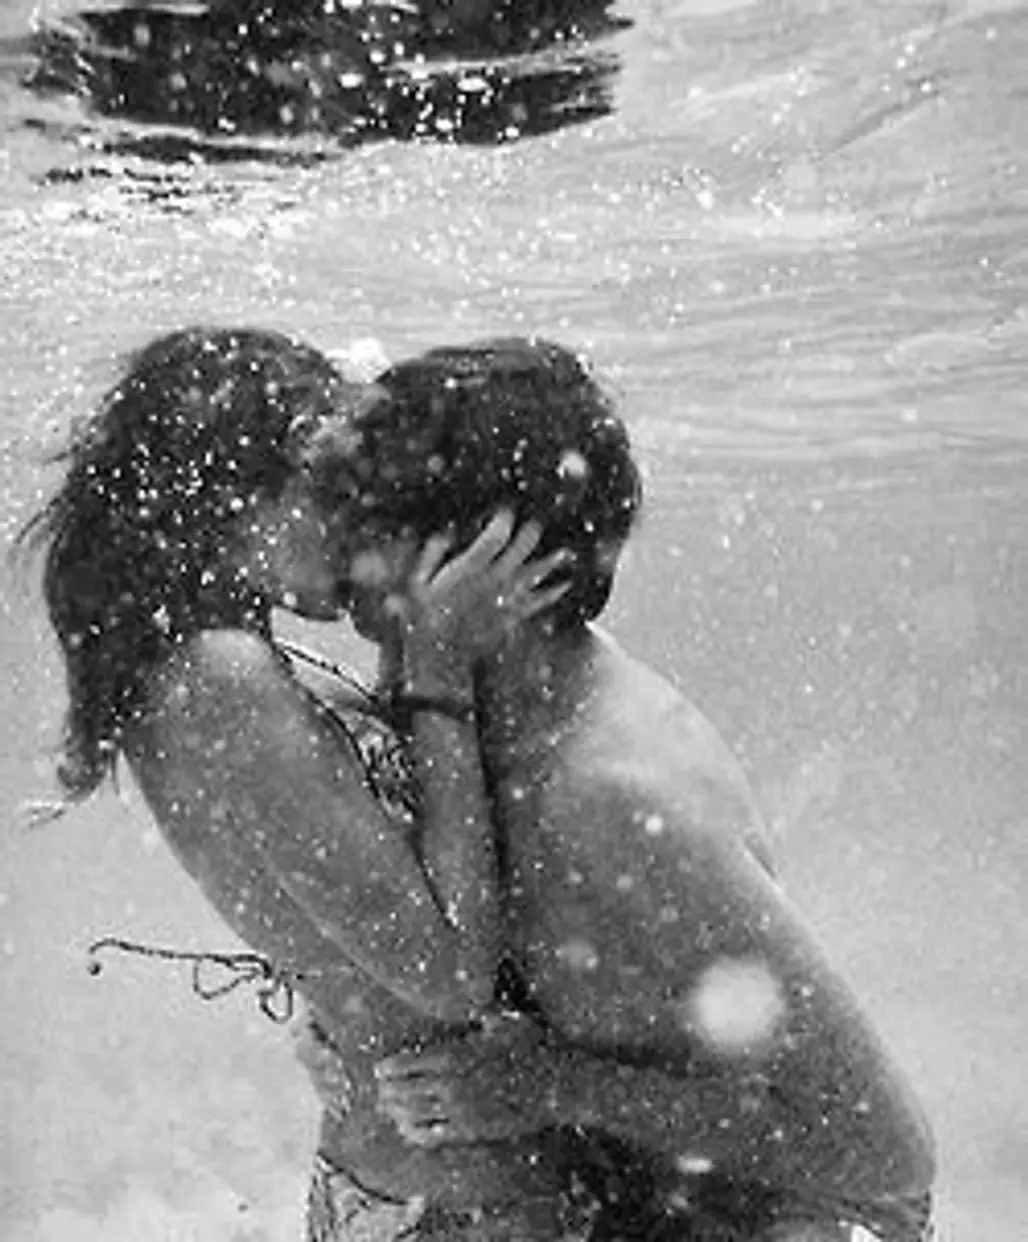 Underwater Kiss